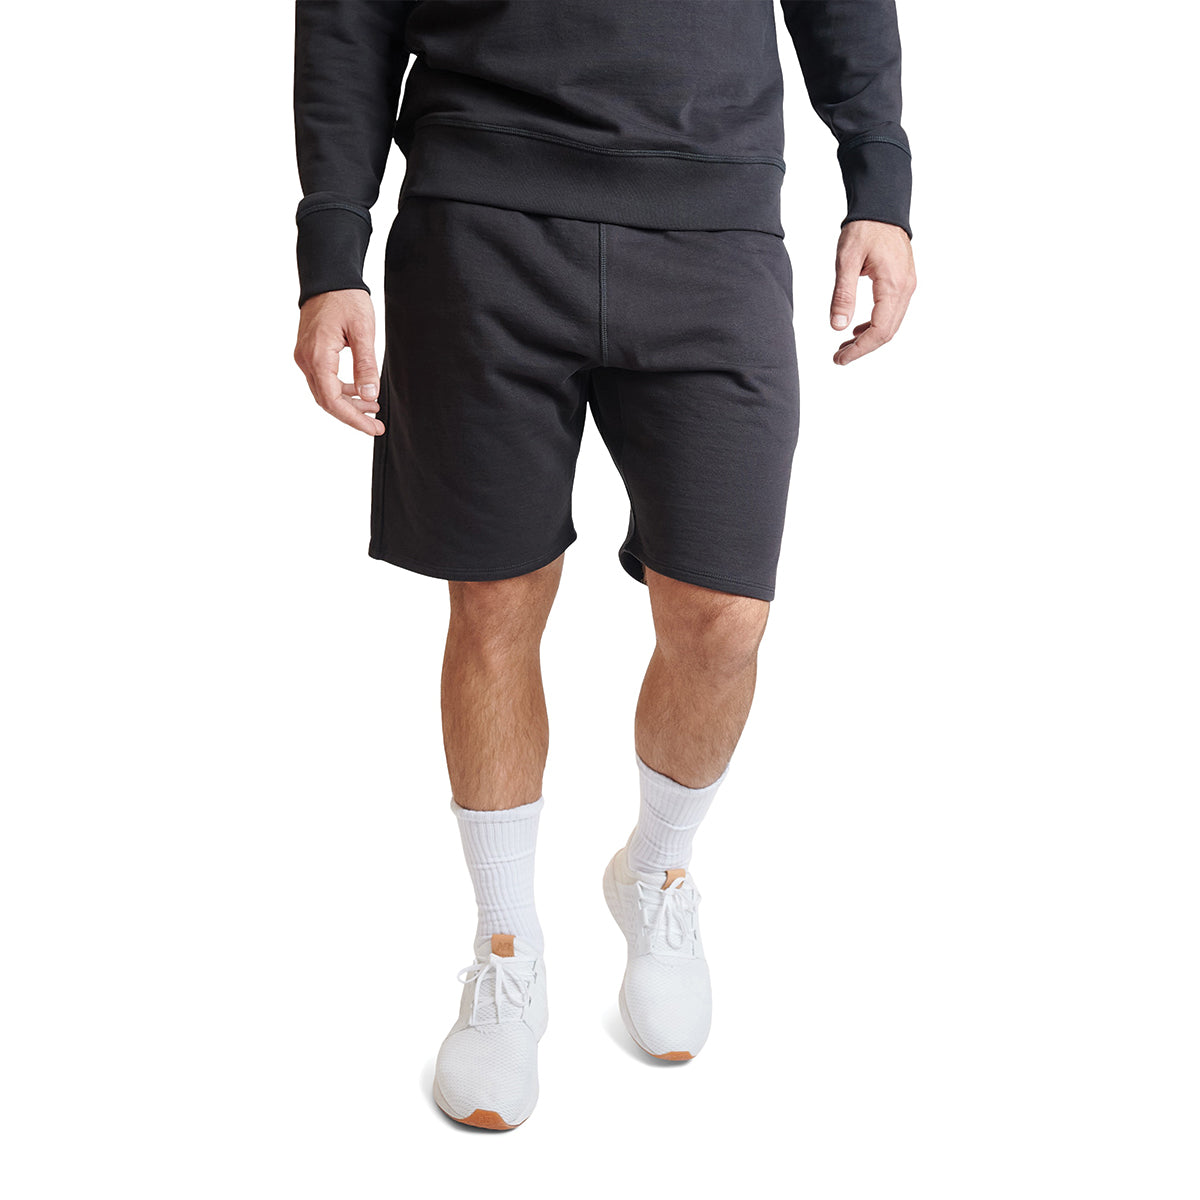 NBD Premium Collection Sweat Shorts-Shorts-Spittin Chiclets-Black-S-Barstool Sports